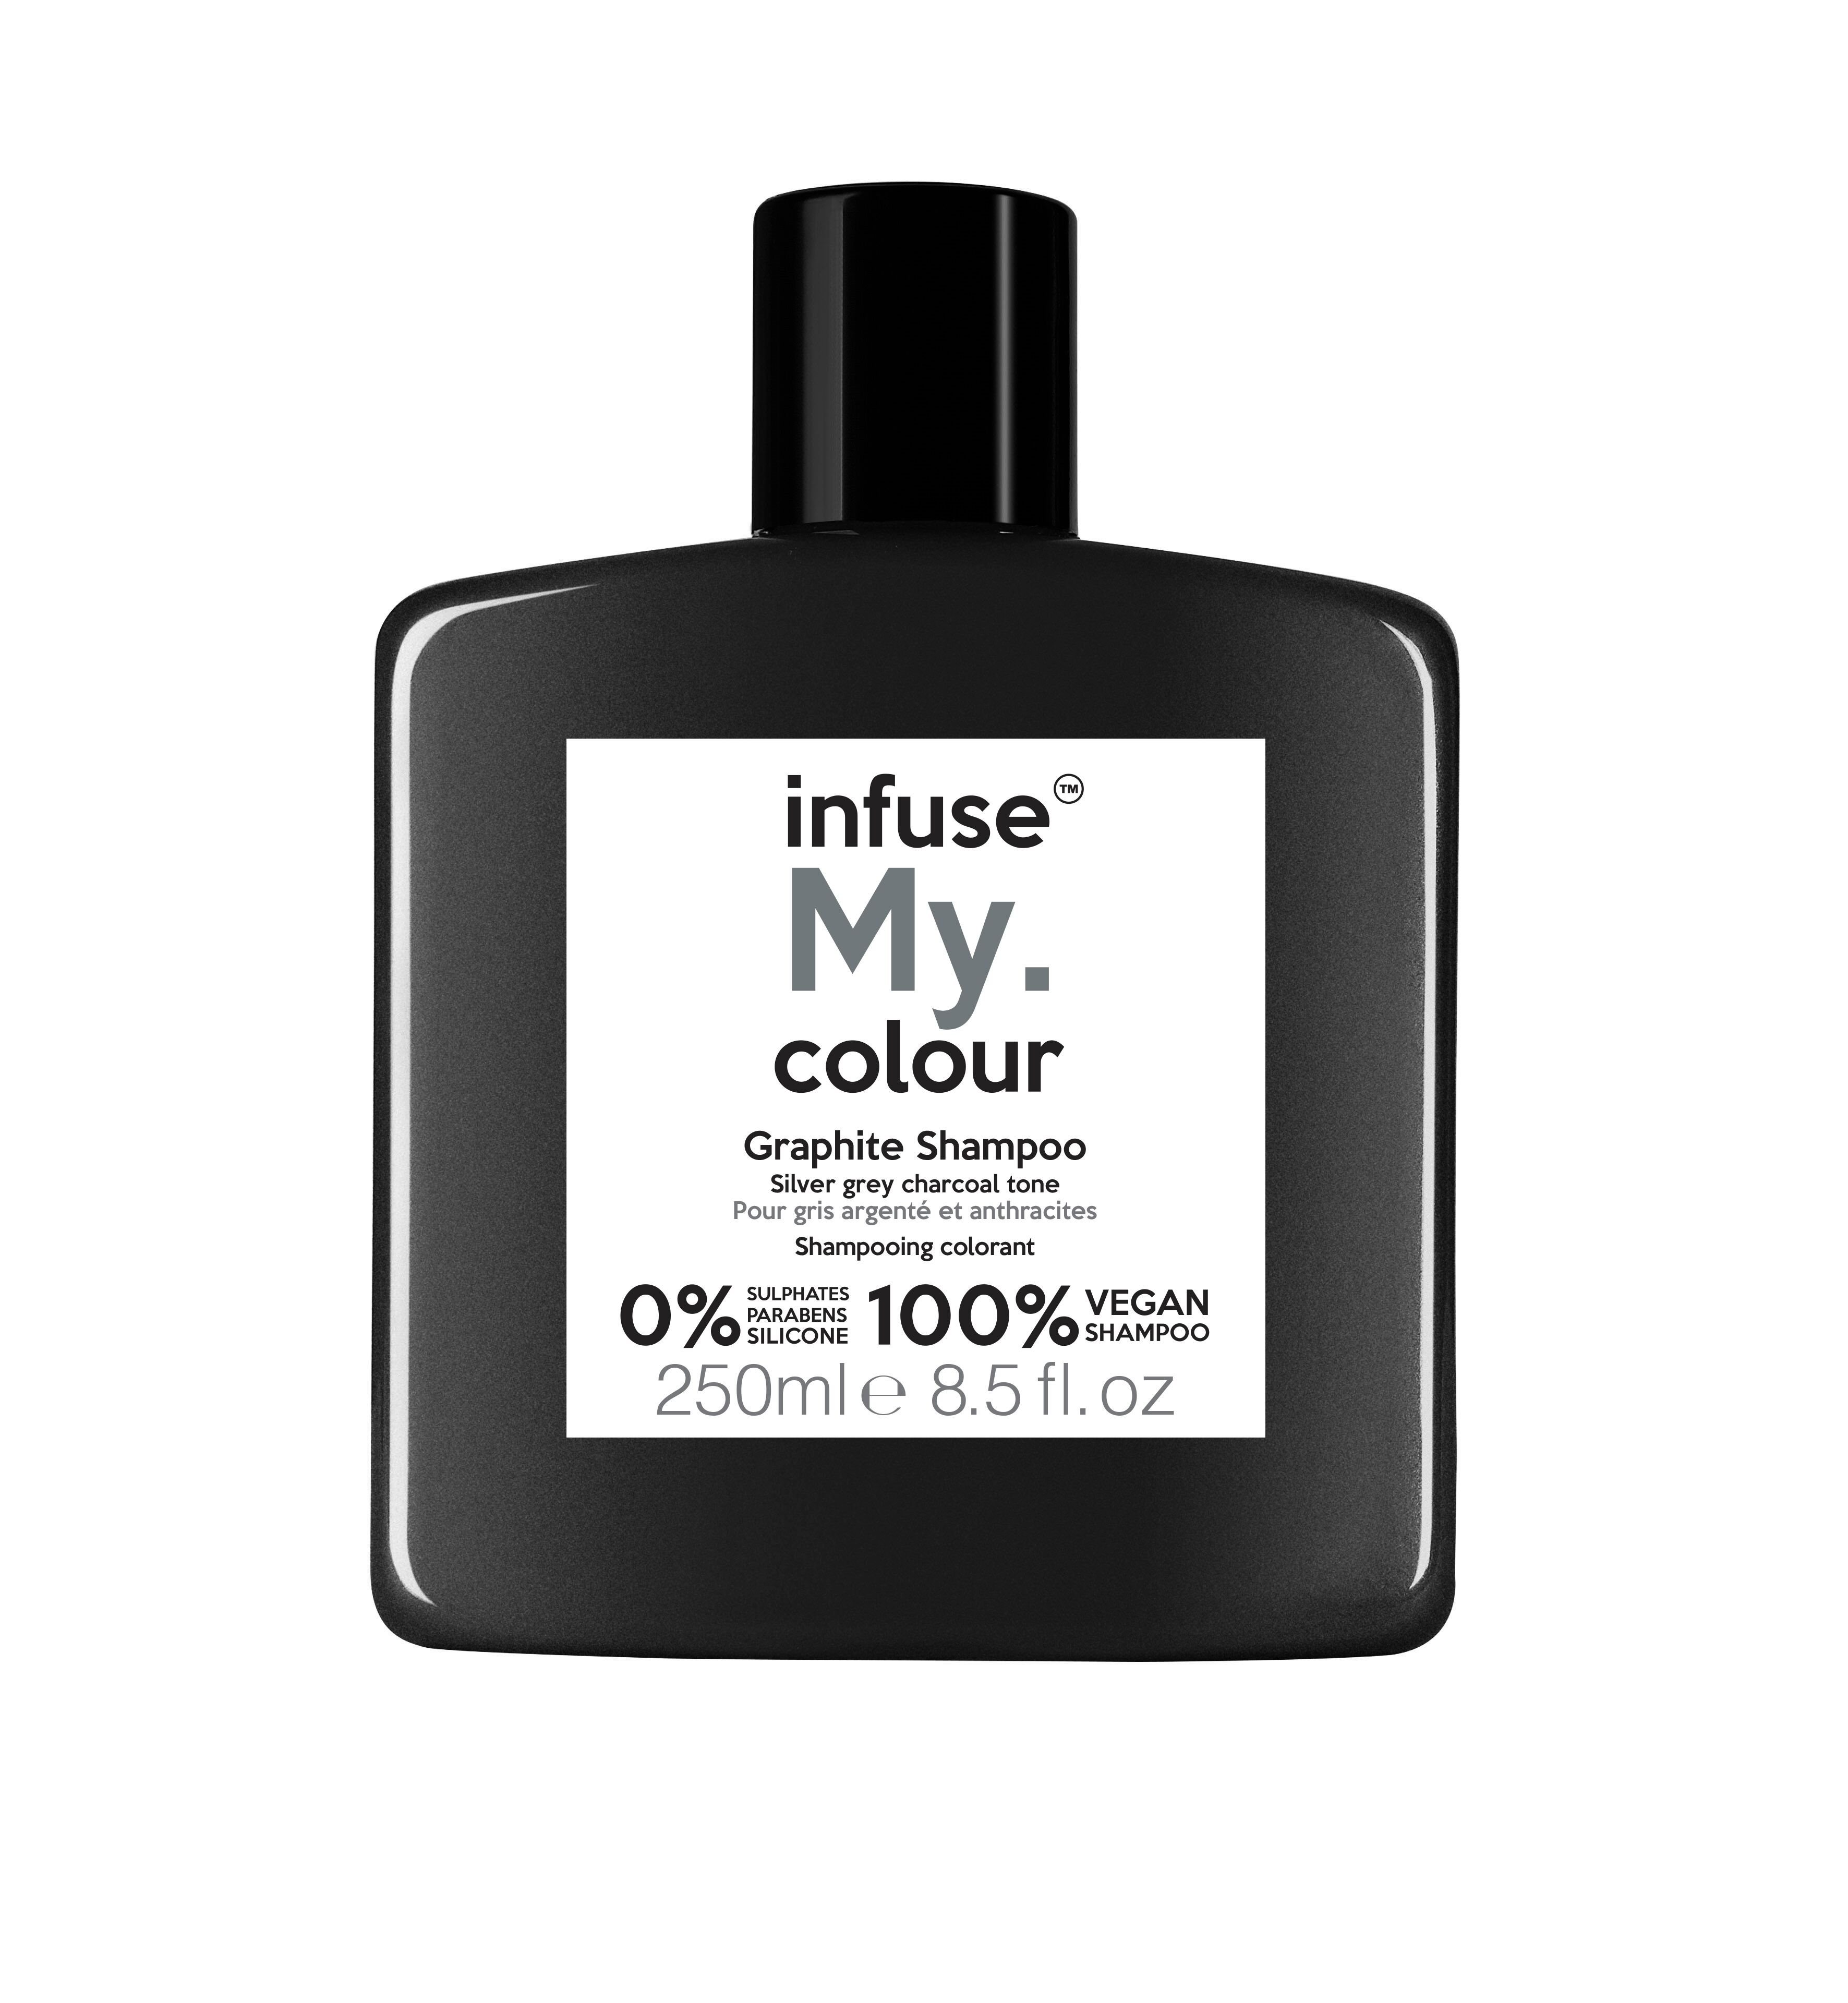 Infuse My. Colour Graphite Shampoo 250ml